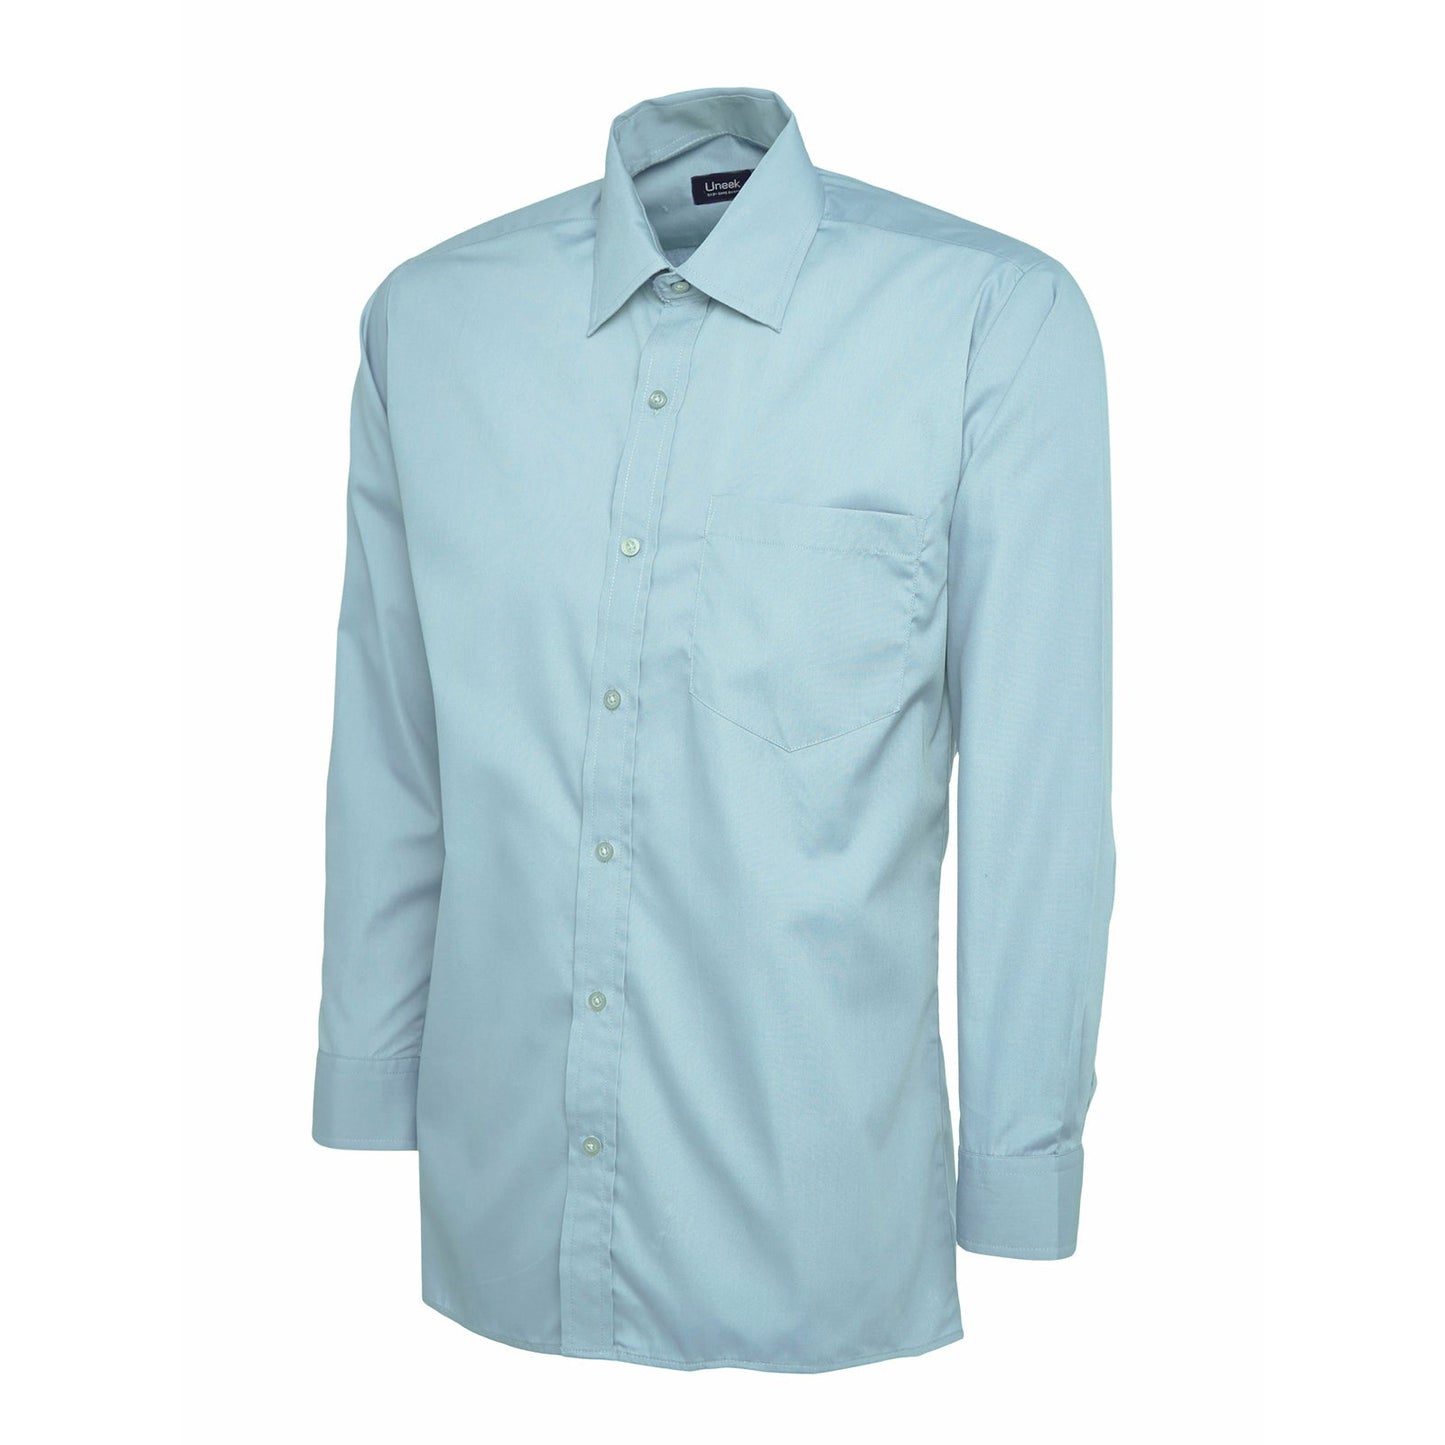 Mens Poplin Full Sleeve Shirt (14.5 - 16.5) - Light Blue